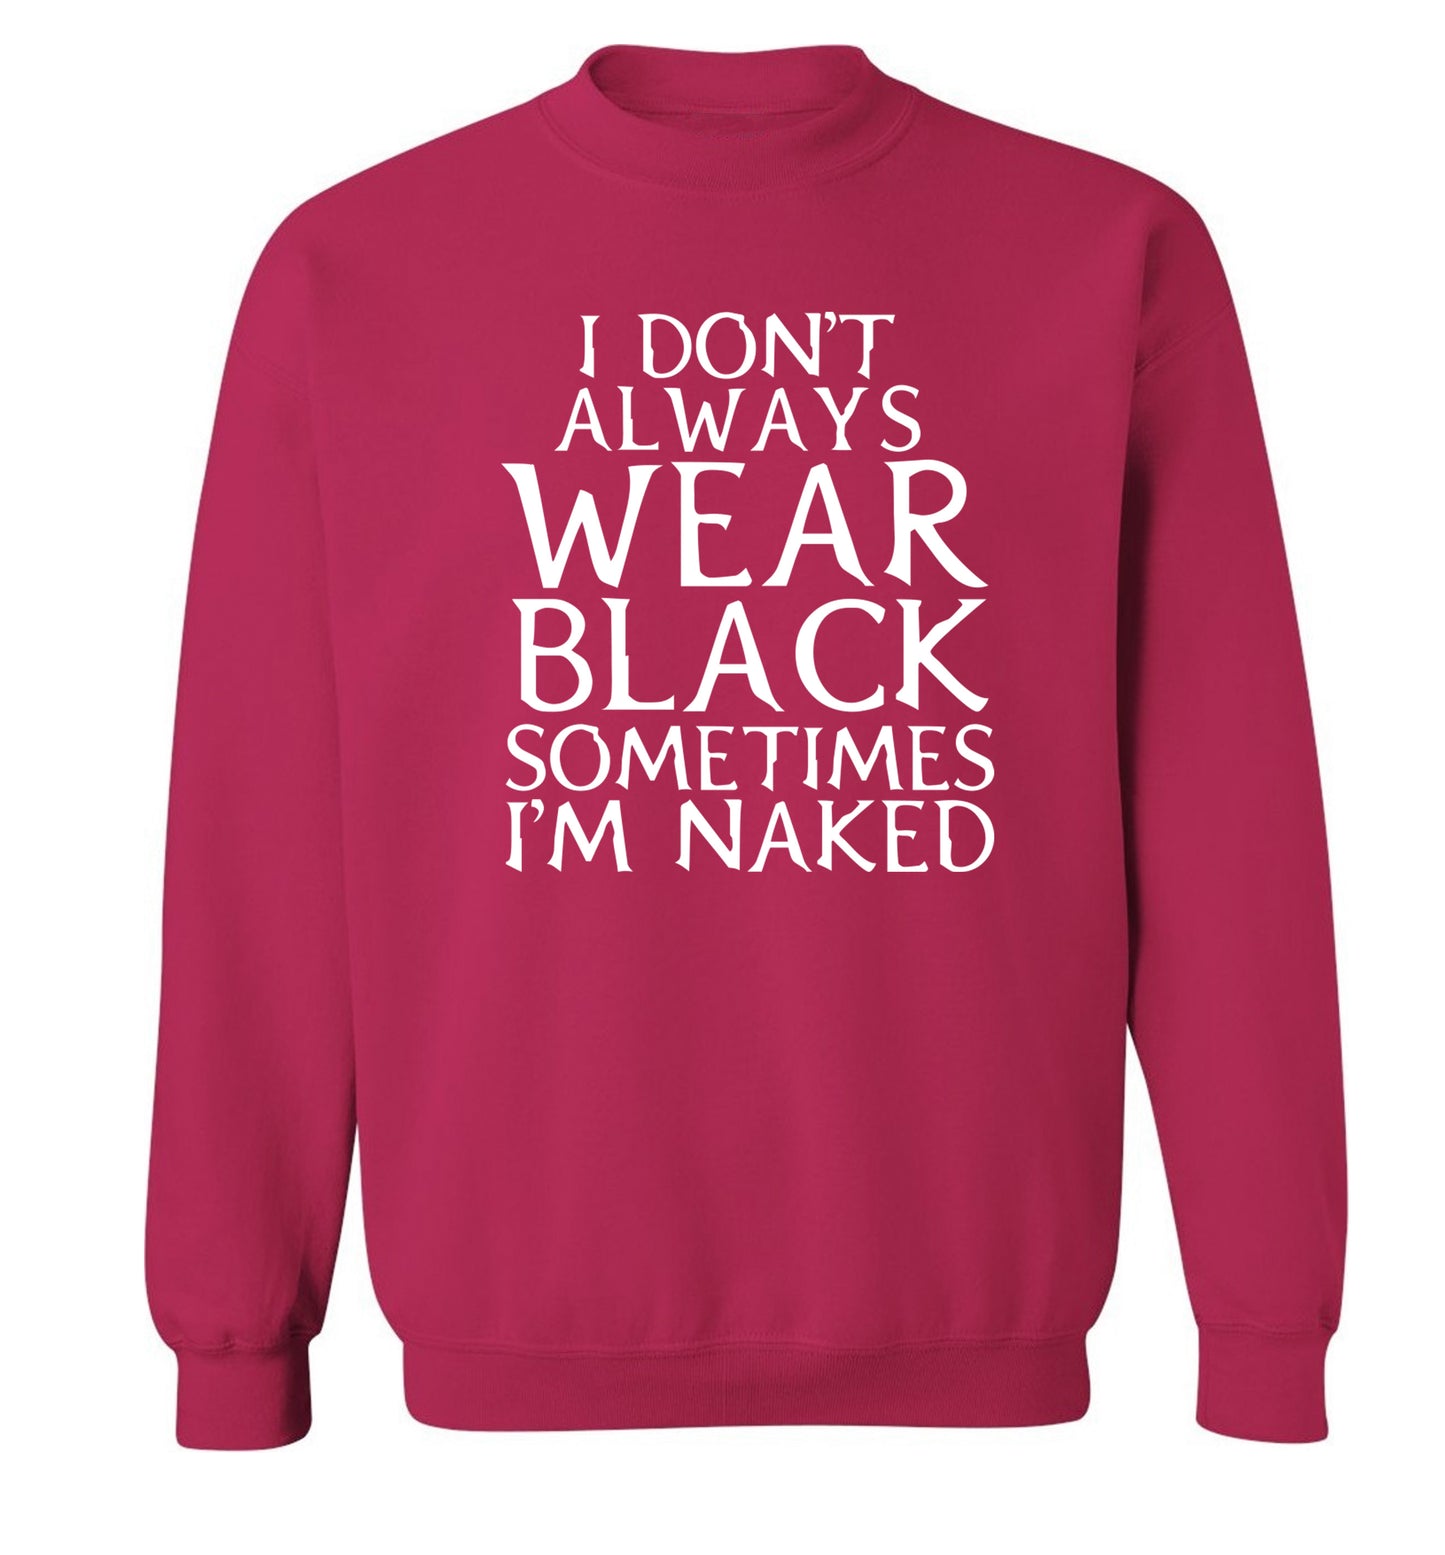 I don't always wear black sometimes I'm naked Adult's unisex pink Sweater 2XL